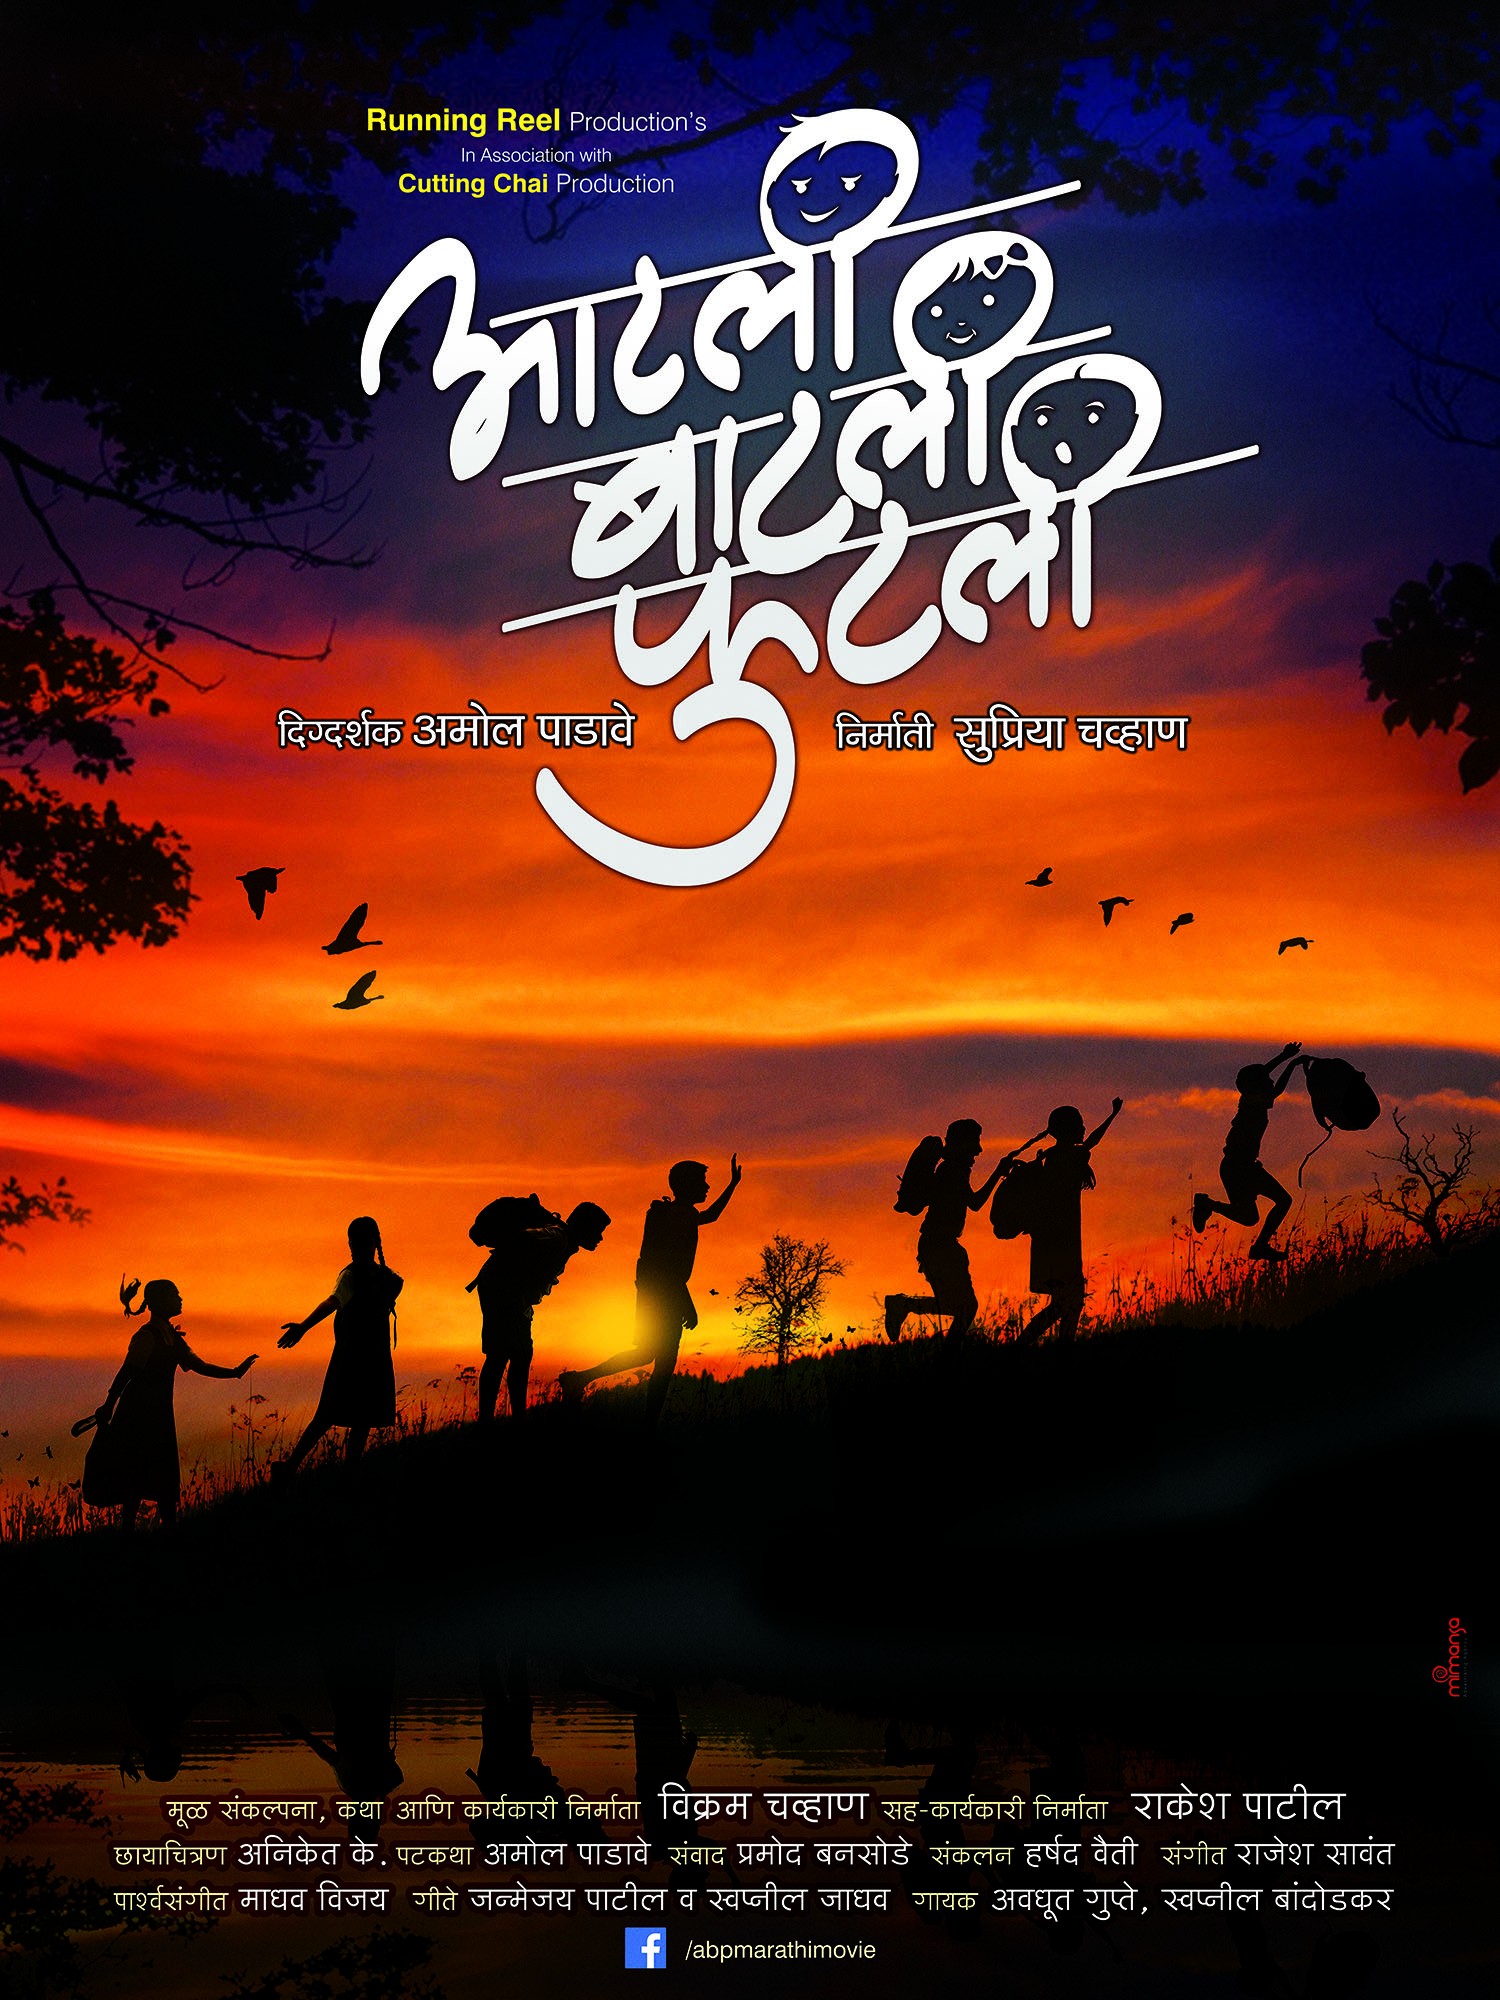 Mega Sized Movie Poster Image for Atali Batali Phutali (#1 of 3)